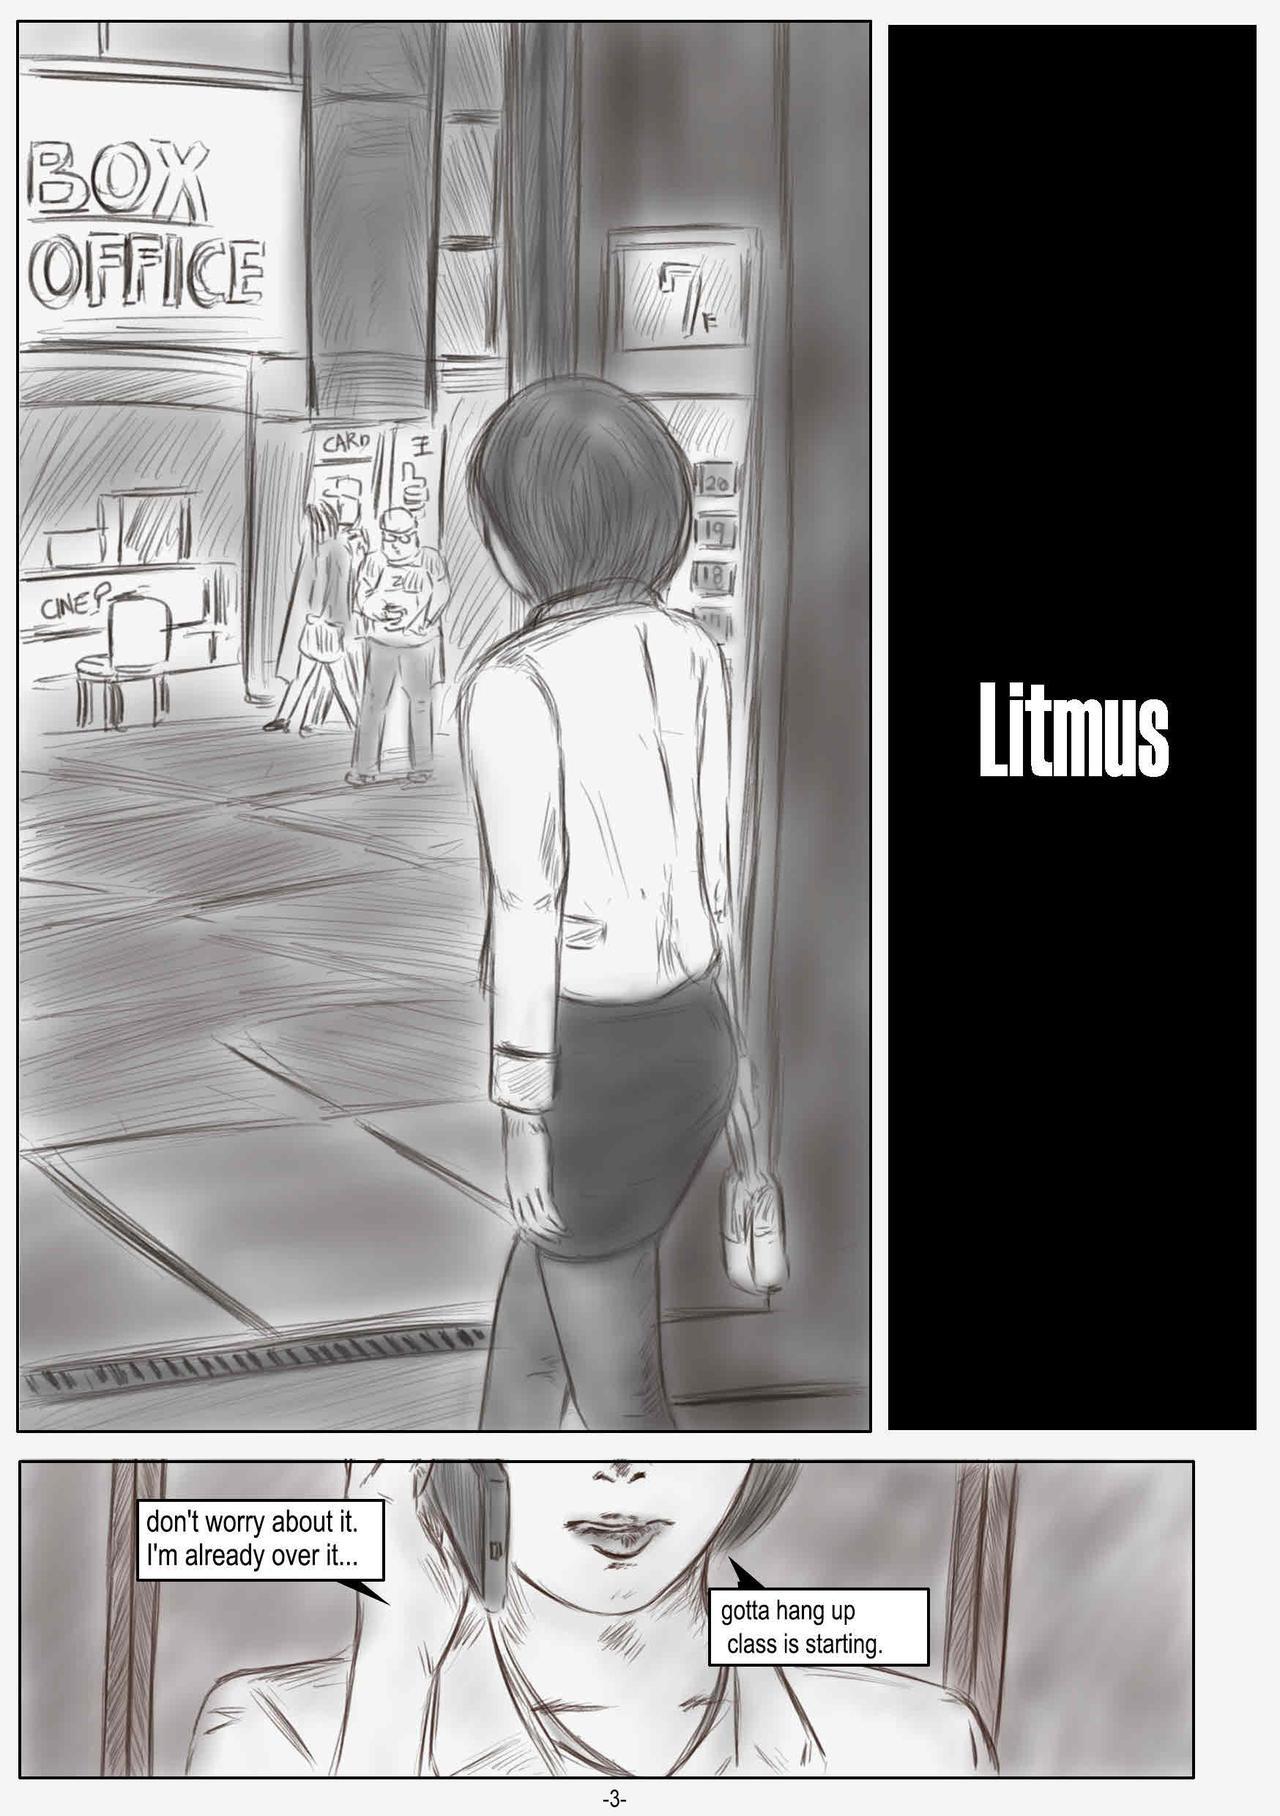 Litmus - Complete Edition 4